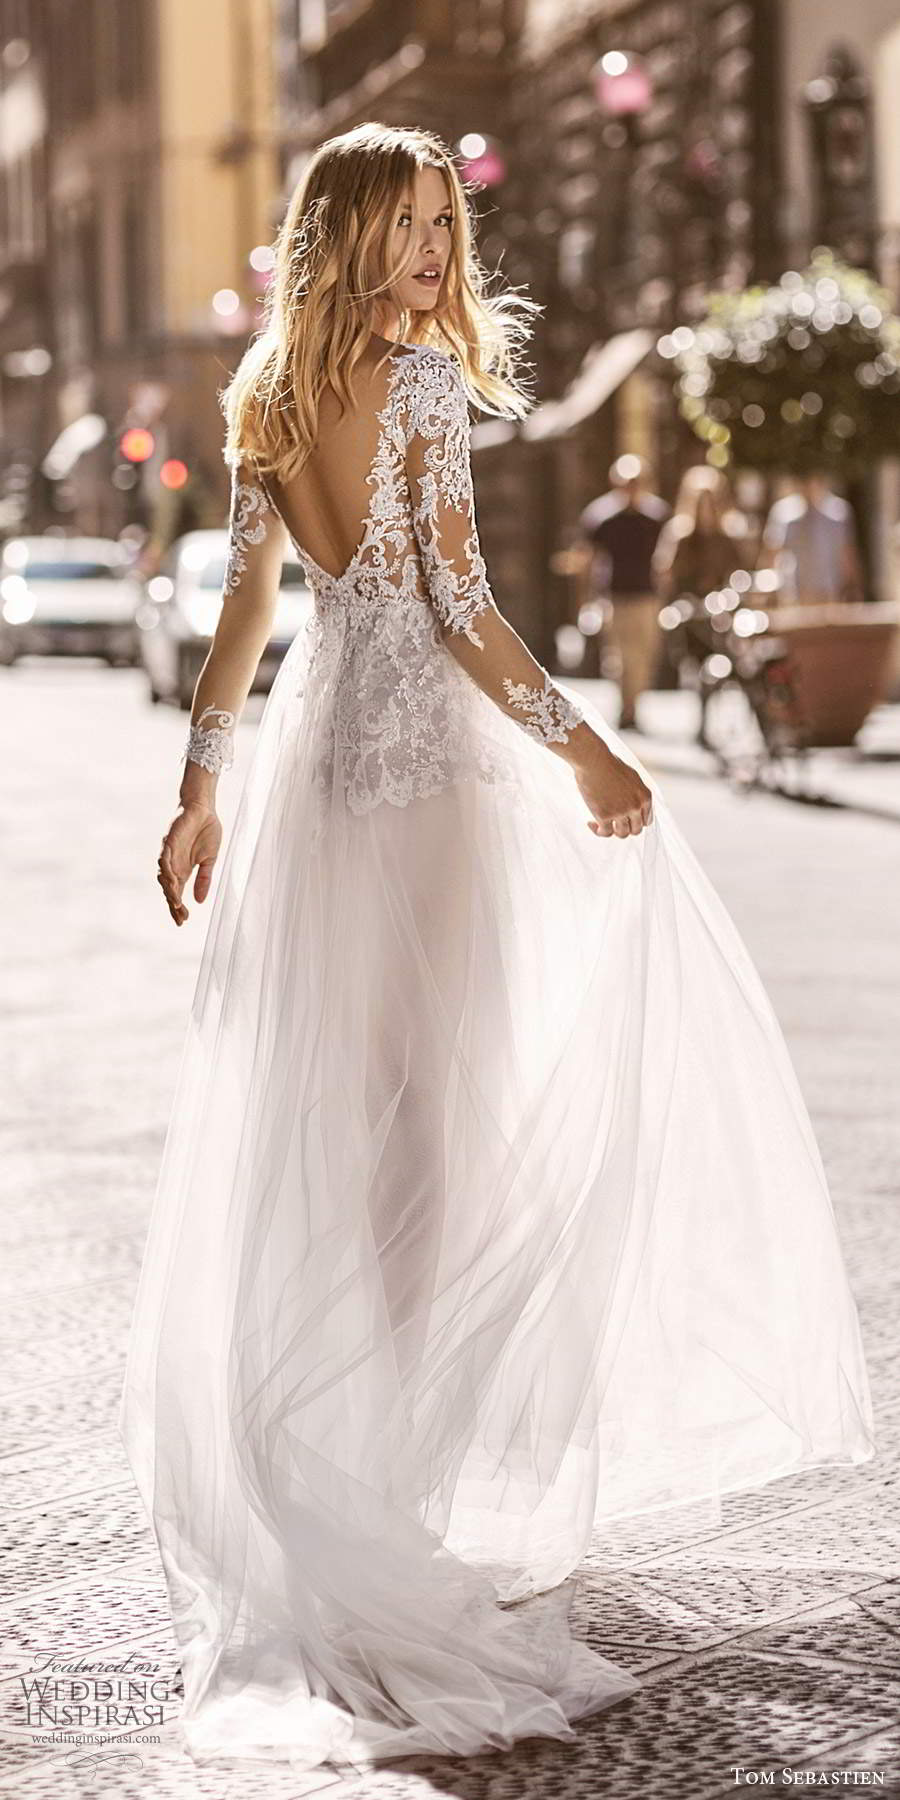 tom sebastien 2020 bridal illusion long sleeves sweetheart neckline heavily embellished bodice a line ball gown wedding dress chapel train (17) bv